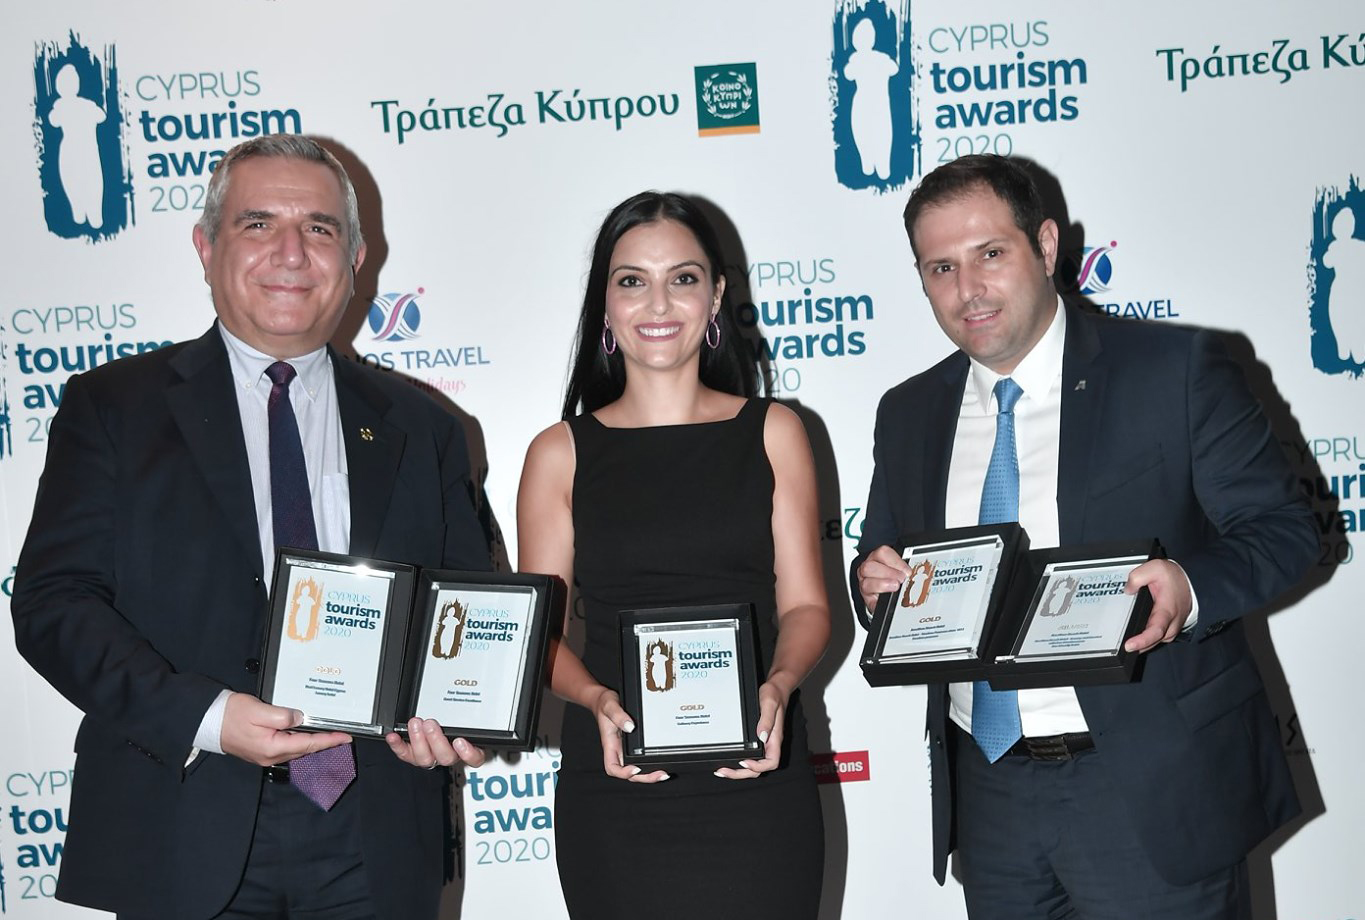 Cyprus Tourism Awards